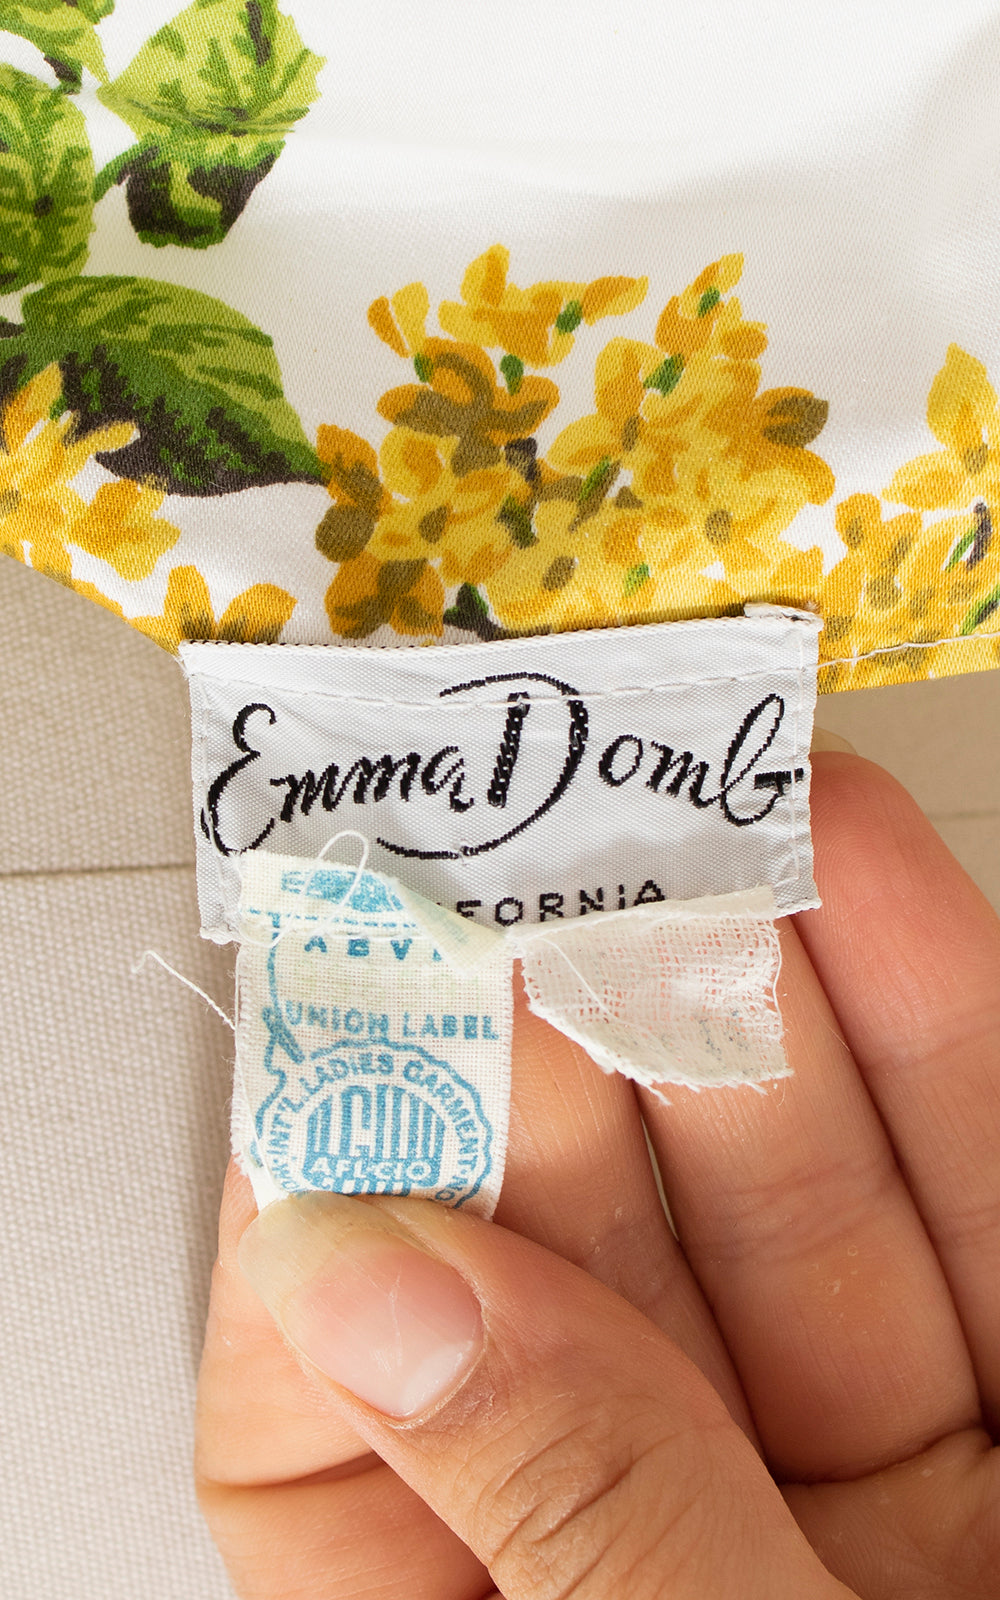 1950s Emma Domb Floral Sequin Soutache Wiggle Dress BirthdayLifeVintage